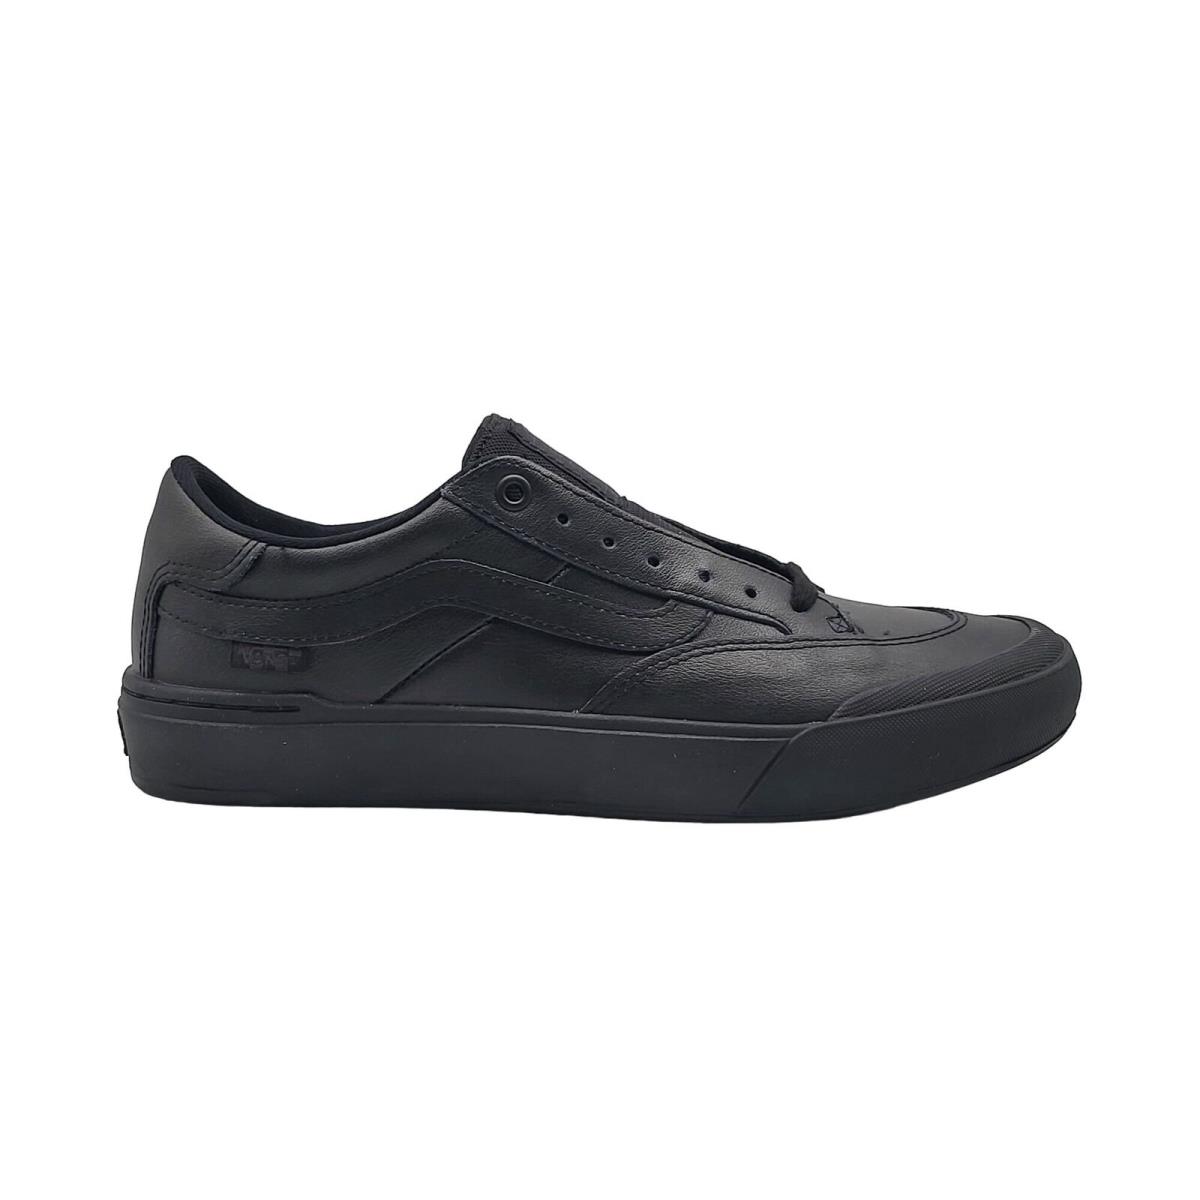 Vans Mens Berle Pro Wearaway Black Cement Blue Leather Shoe Size 8.5